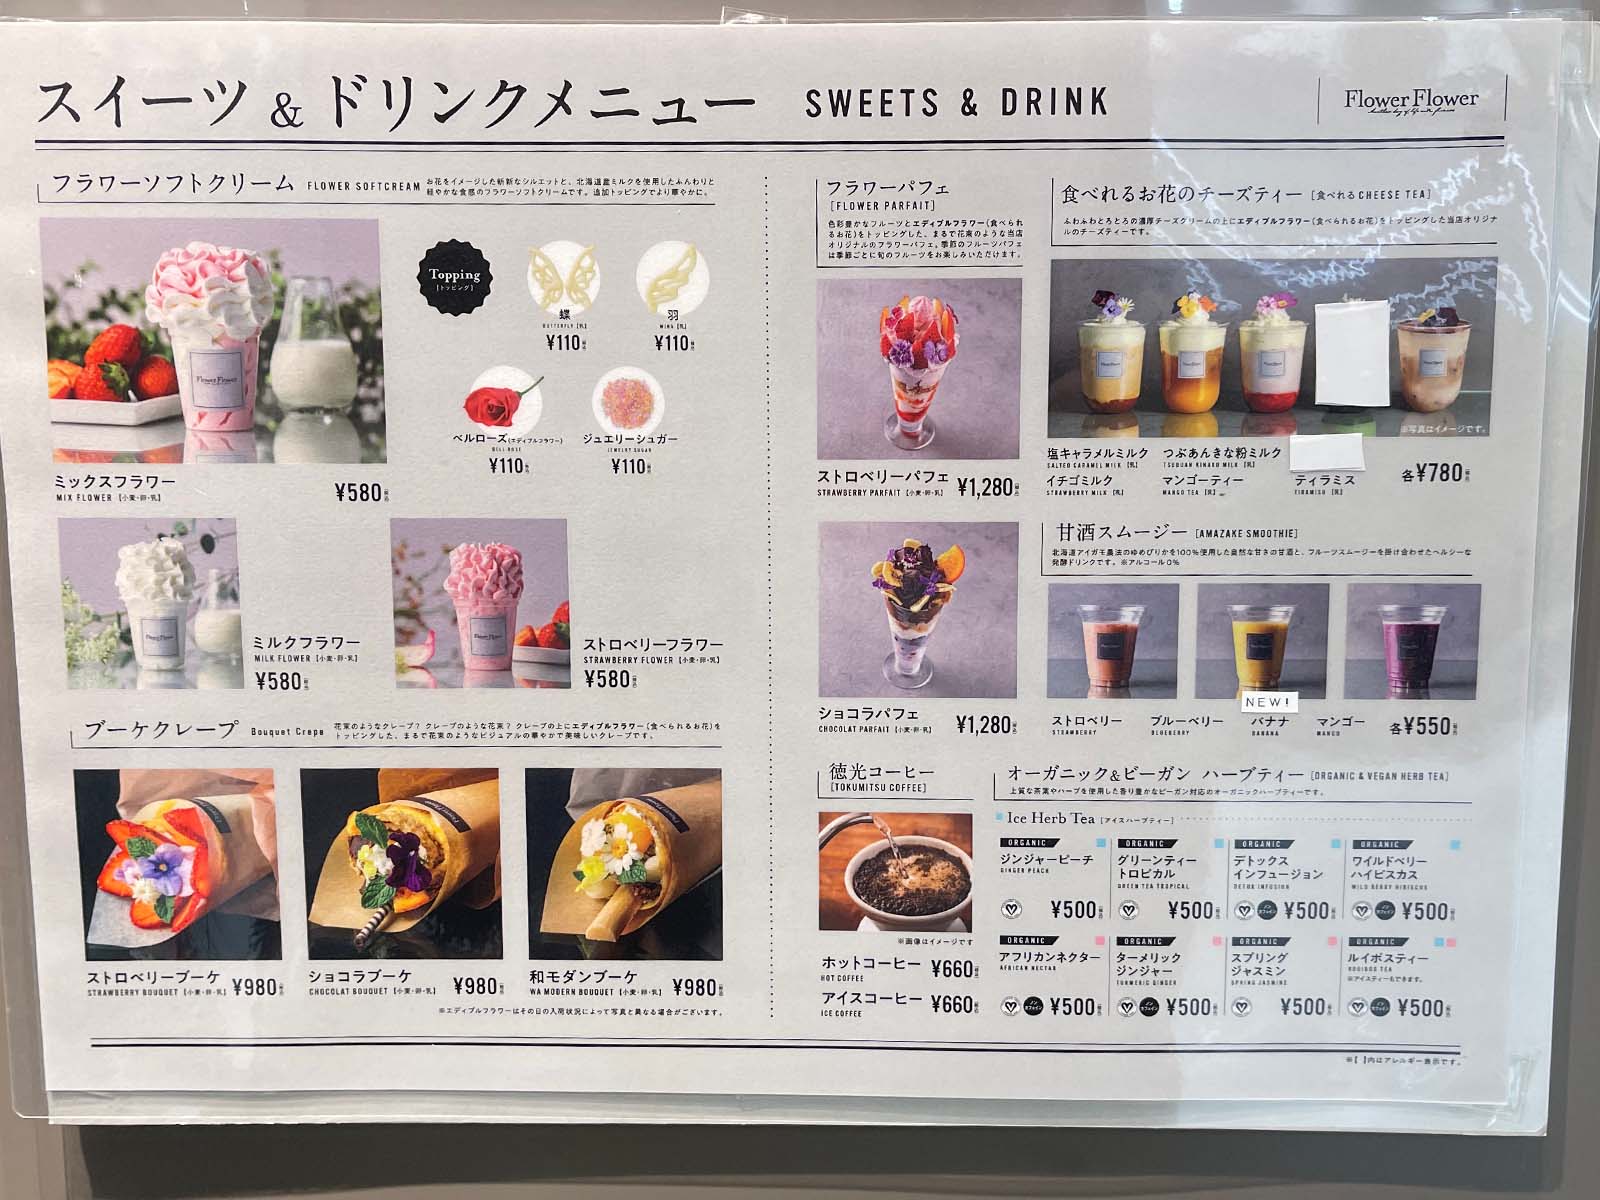 Flower Flowerのミックスフラワーソフトクリーム食べたよ！／札幌駅